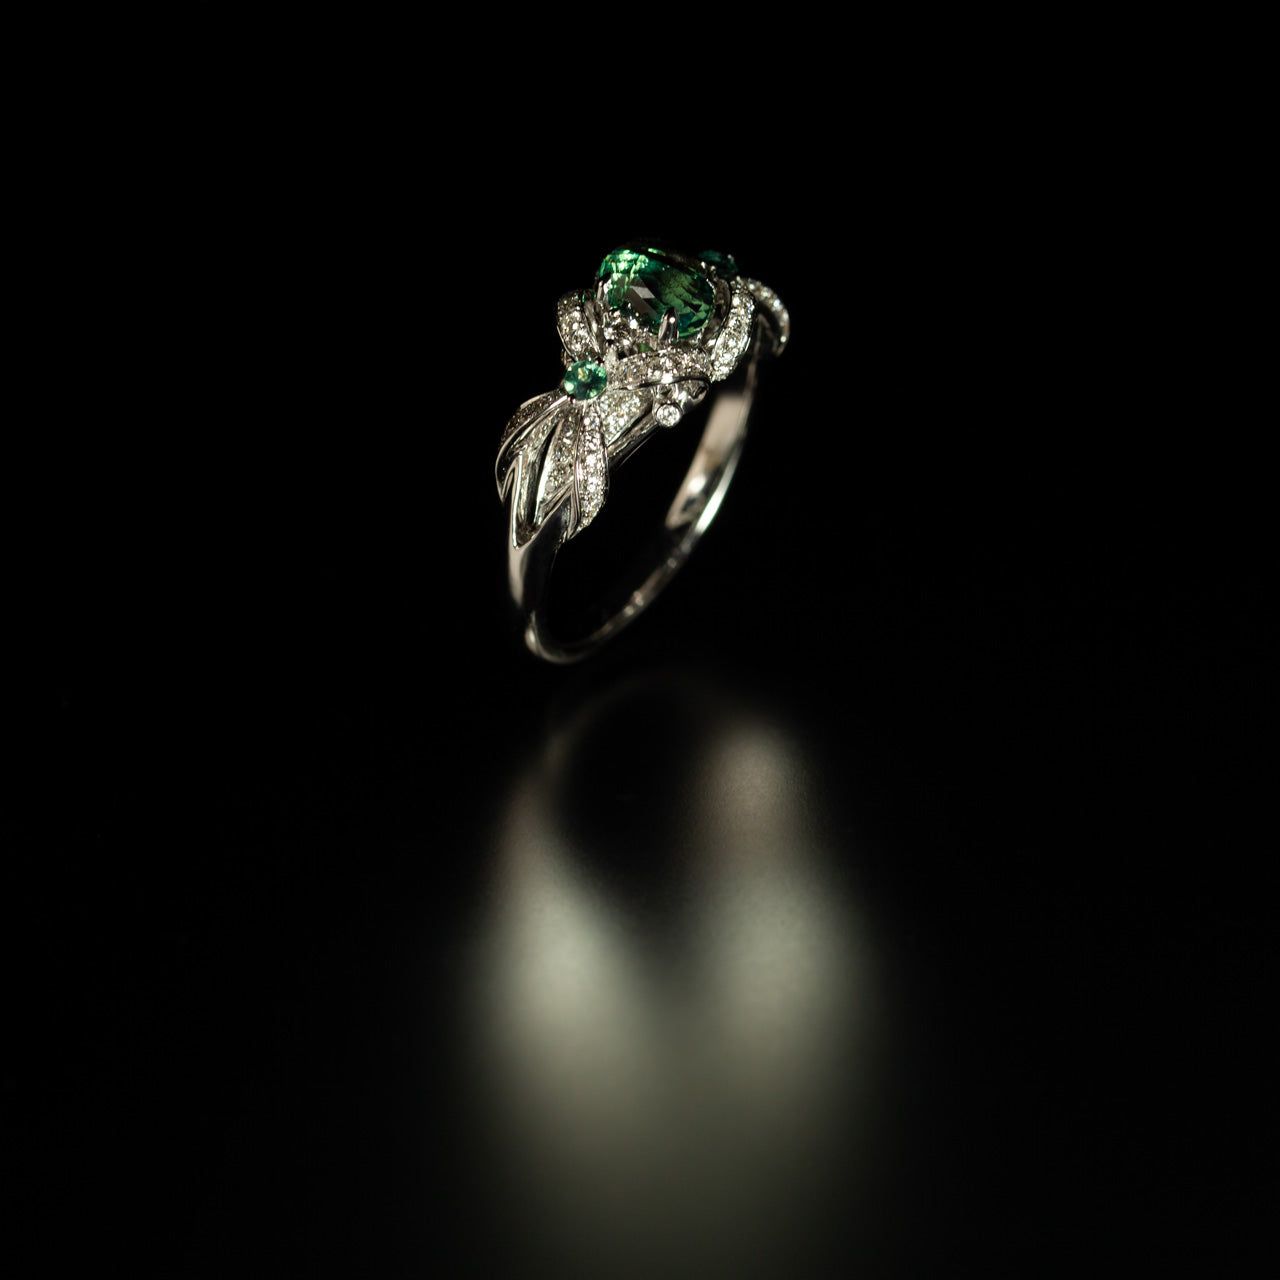 True Masterpiece of Jewelry Art. 1.57ctw Natural Alexandrite Diamond 18k White Gold Ring - The Alexandrite